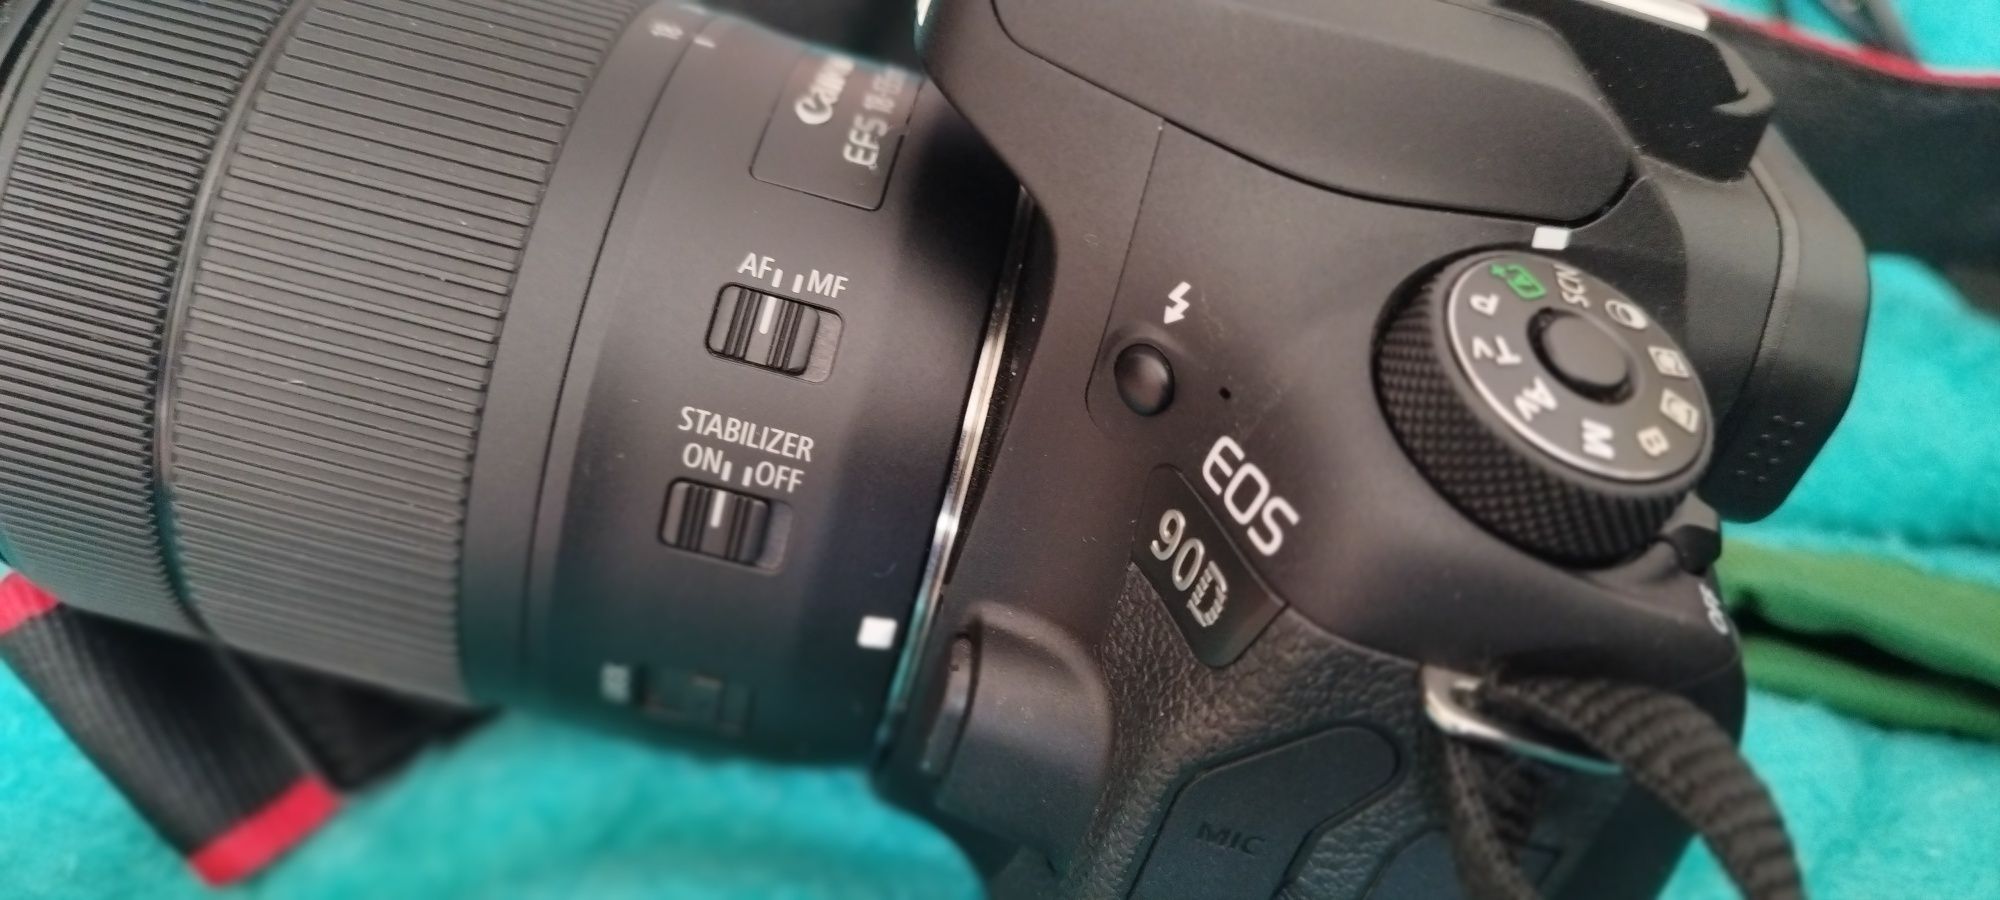 Canon eos 90d com lente EF-S 18-135mm